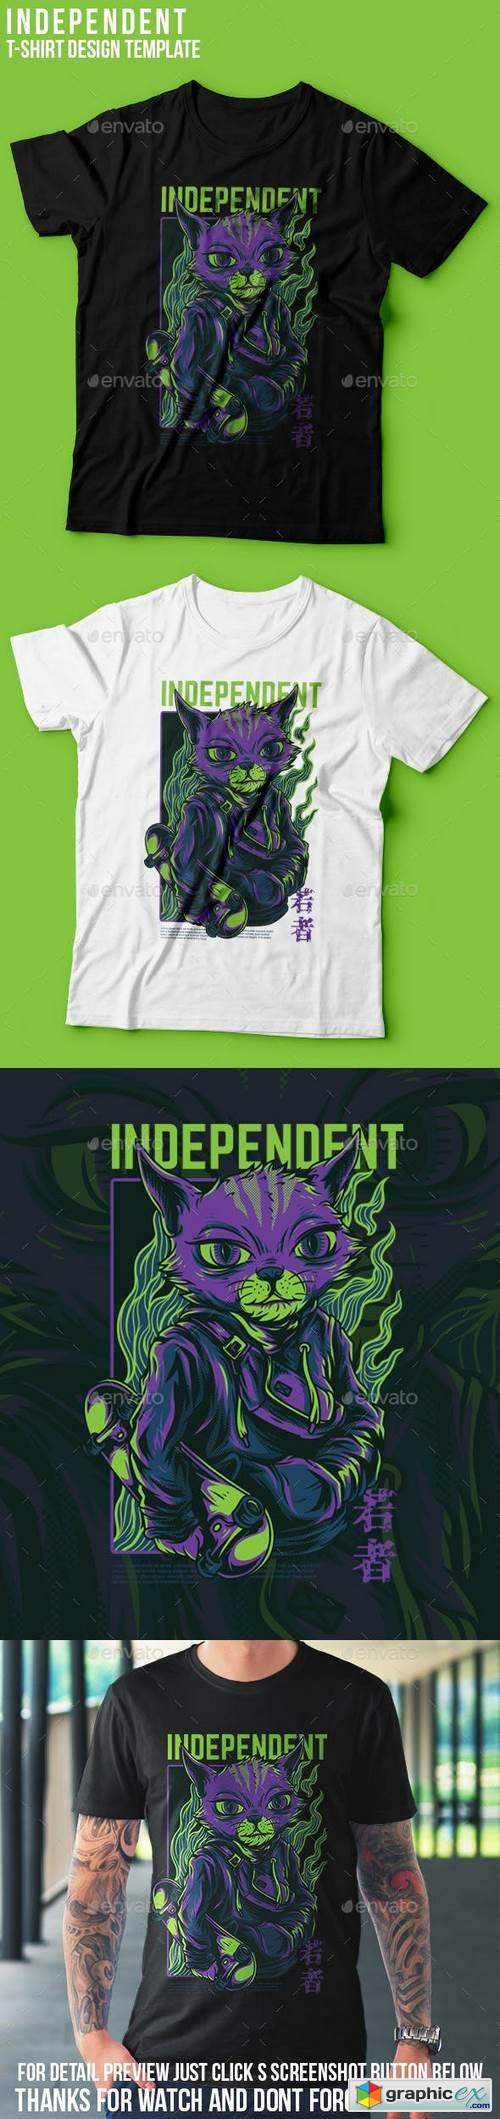 Independent Cat T-Shirt Design